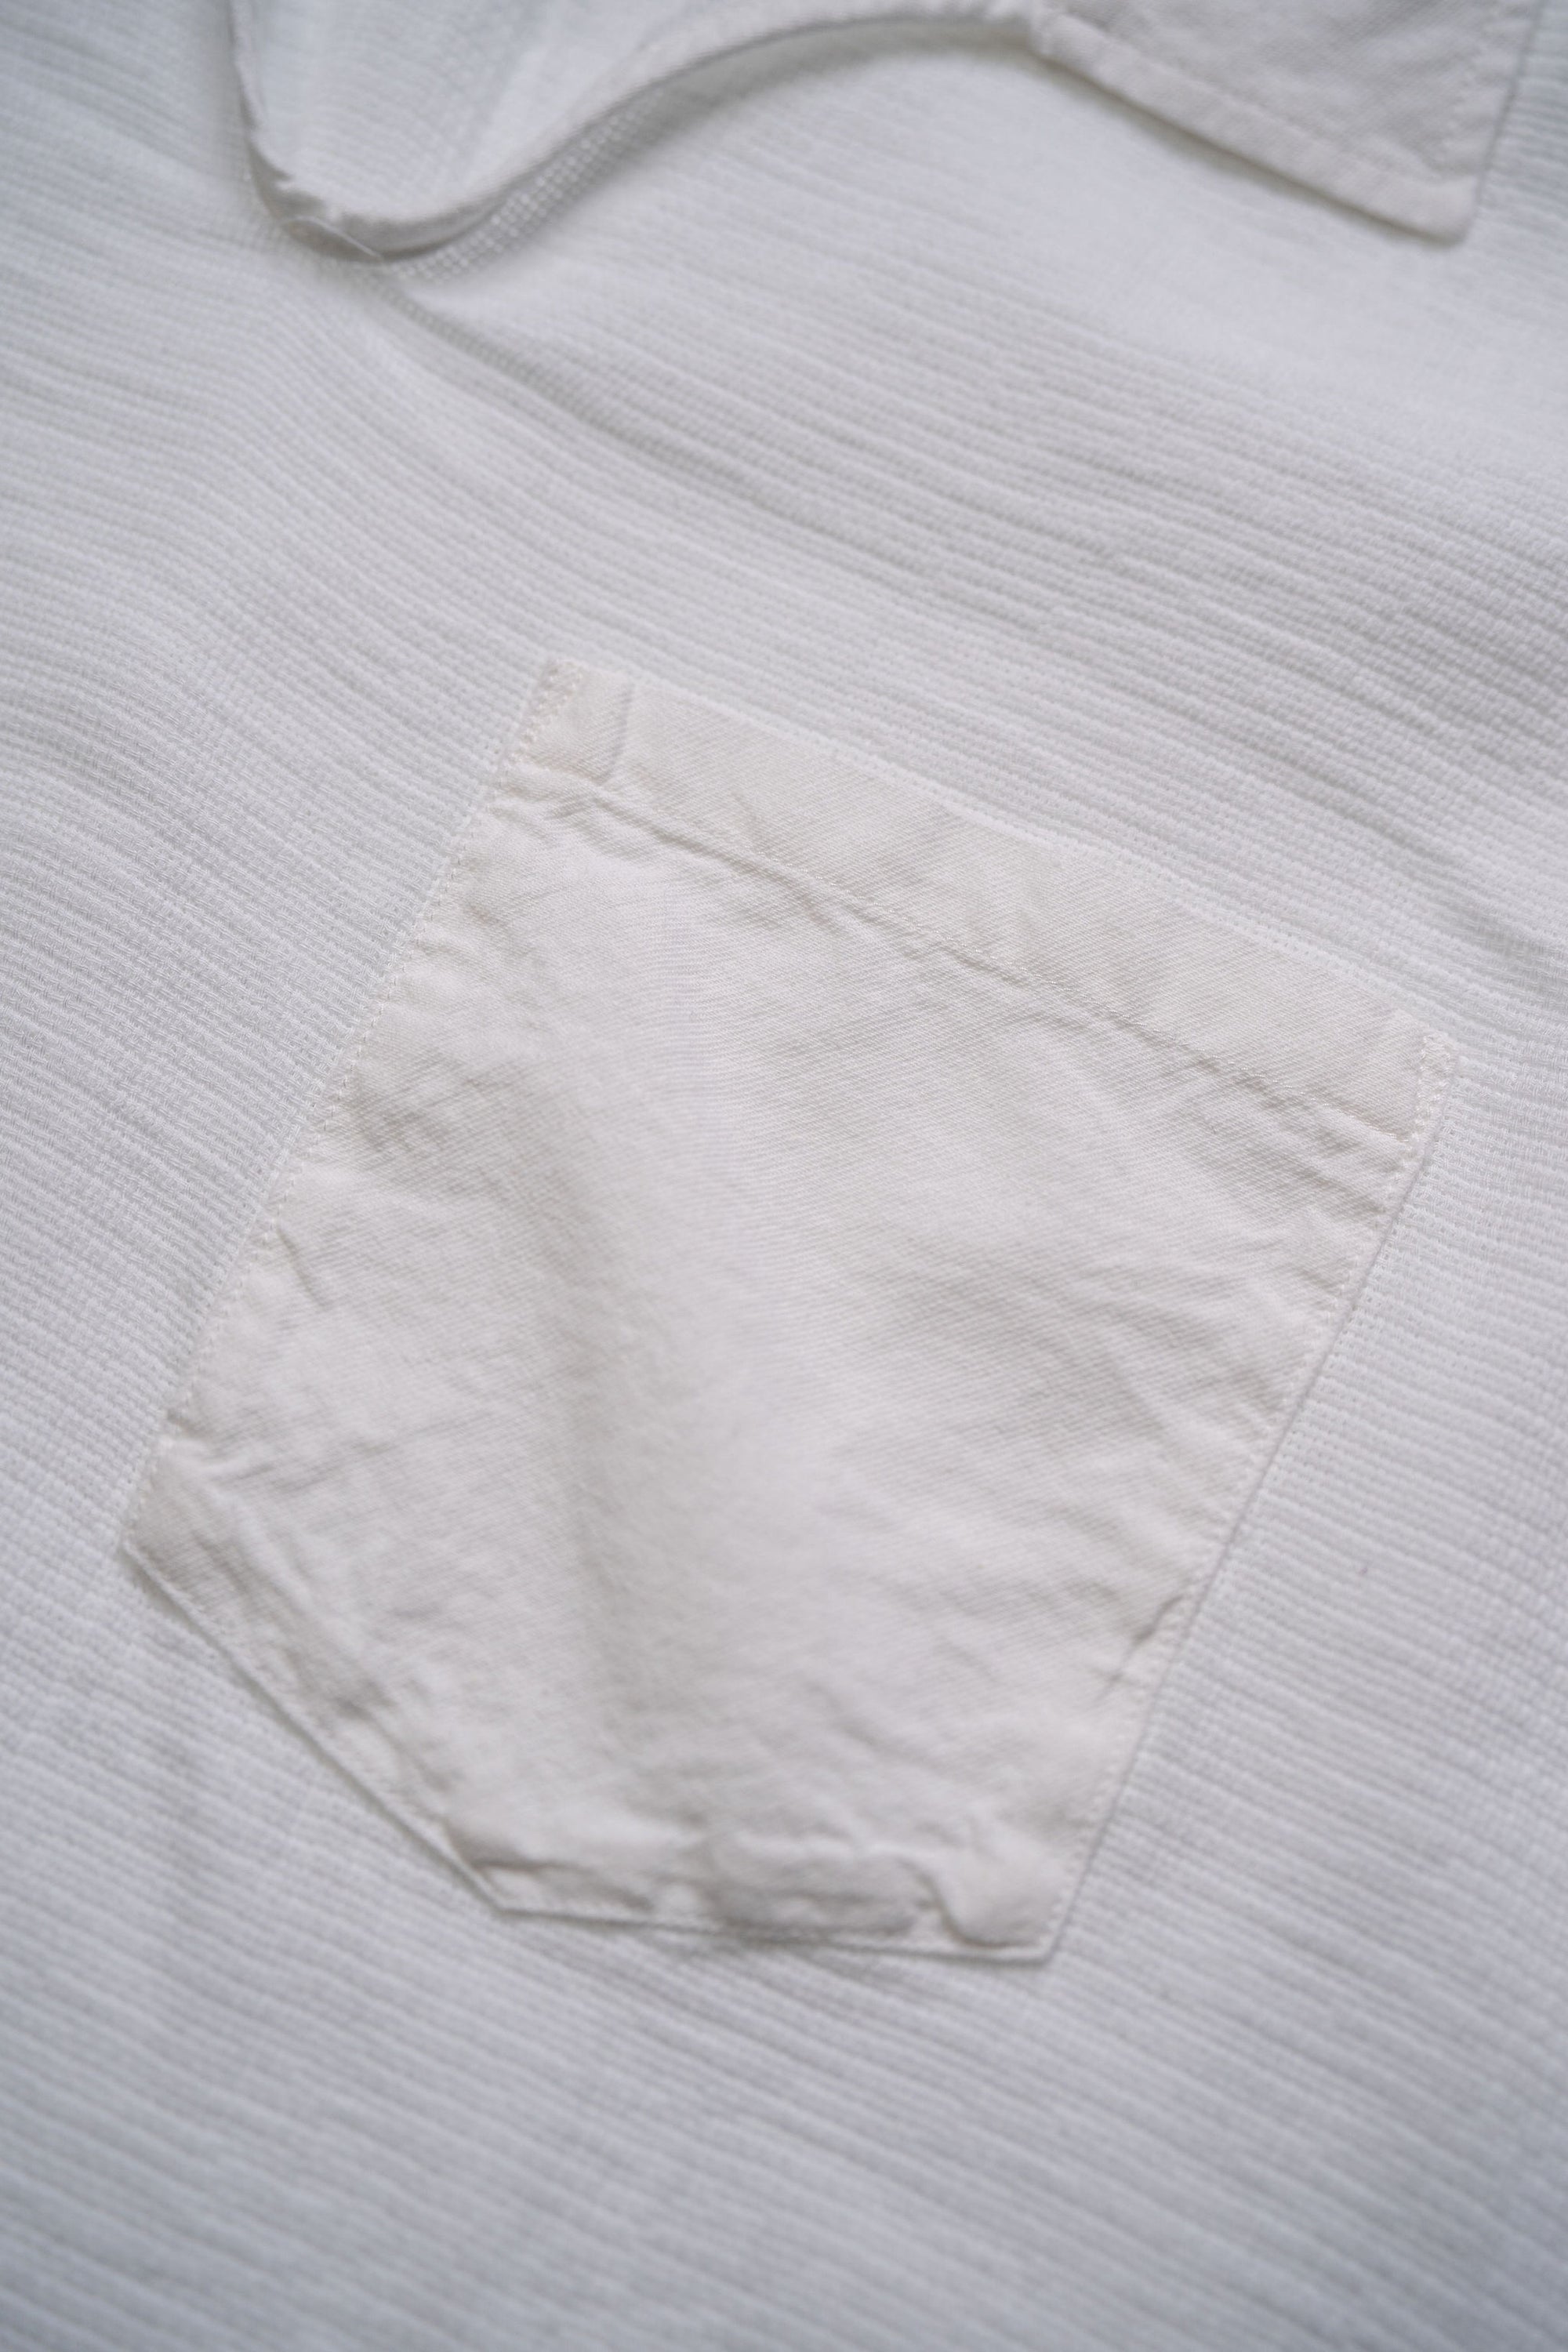 Hansen Garments Marius Casual Pull-on Shirt - White